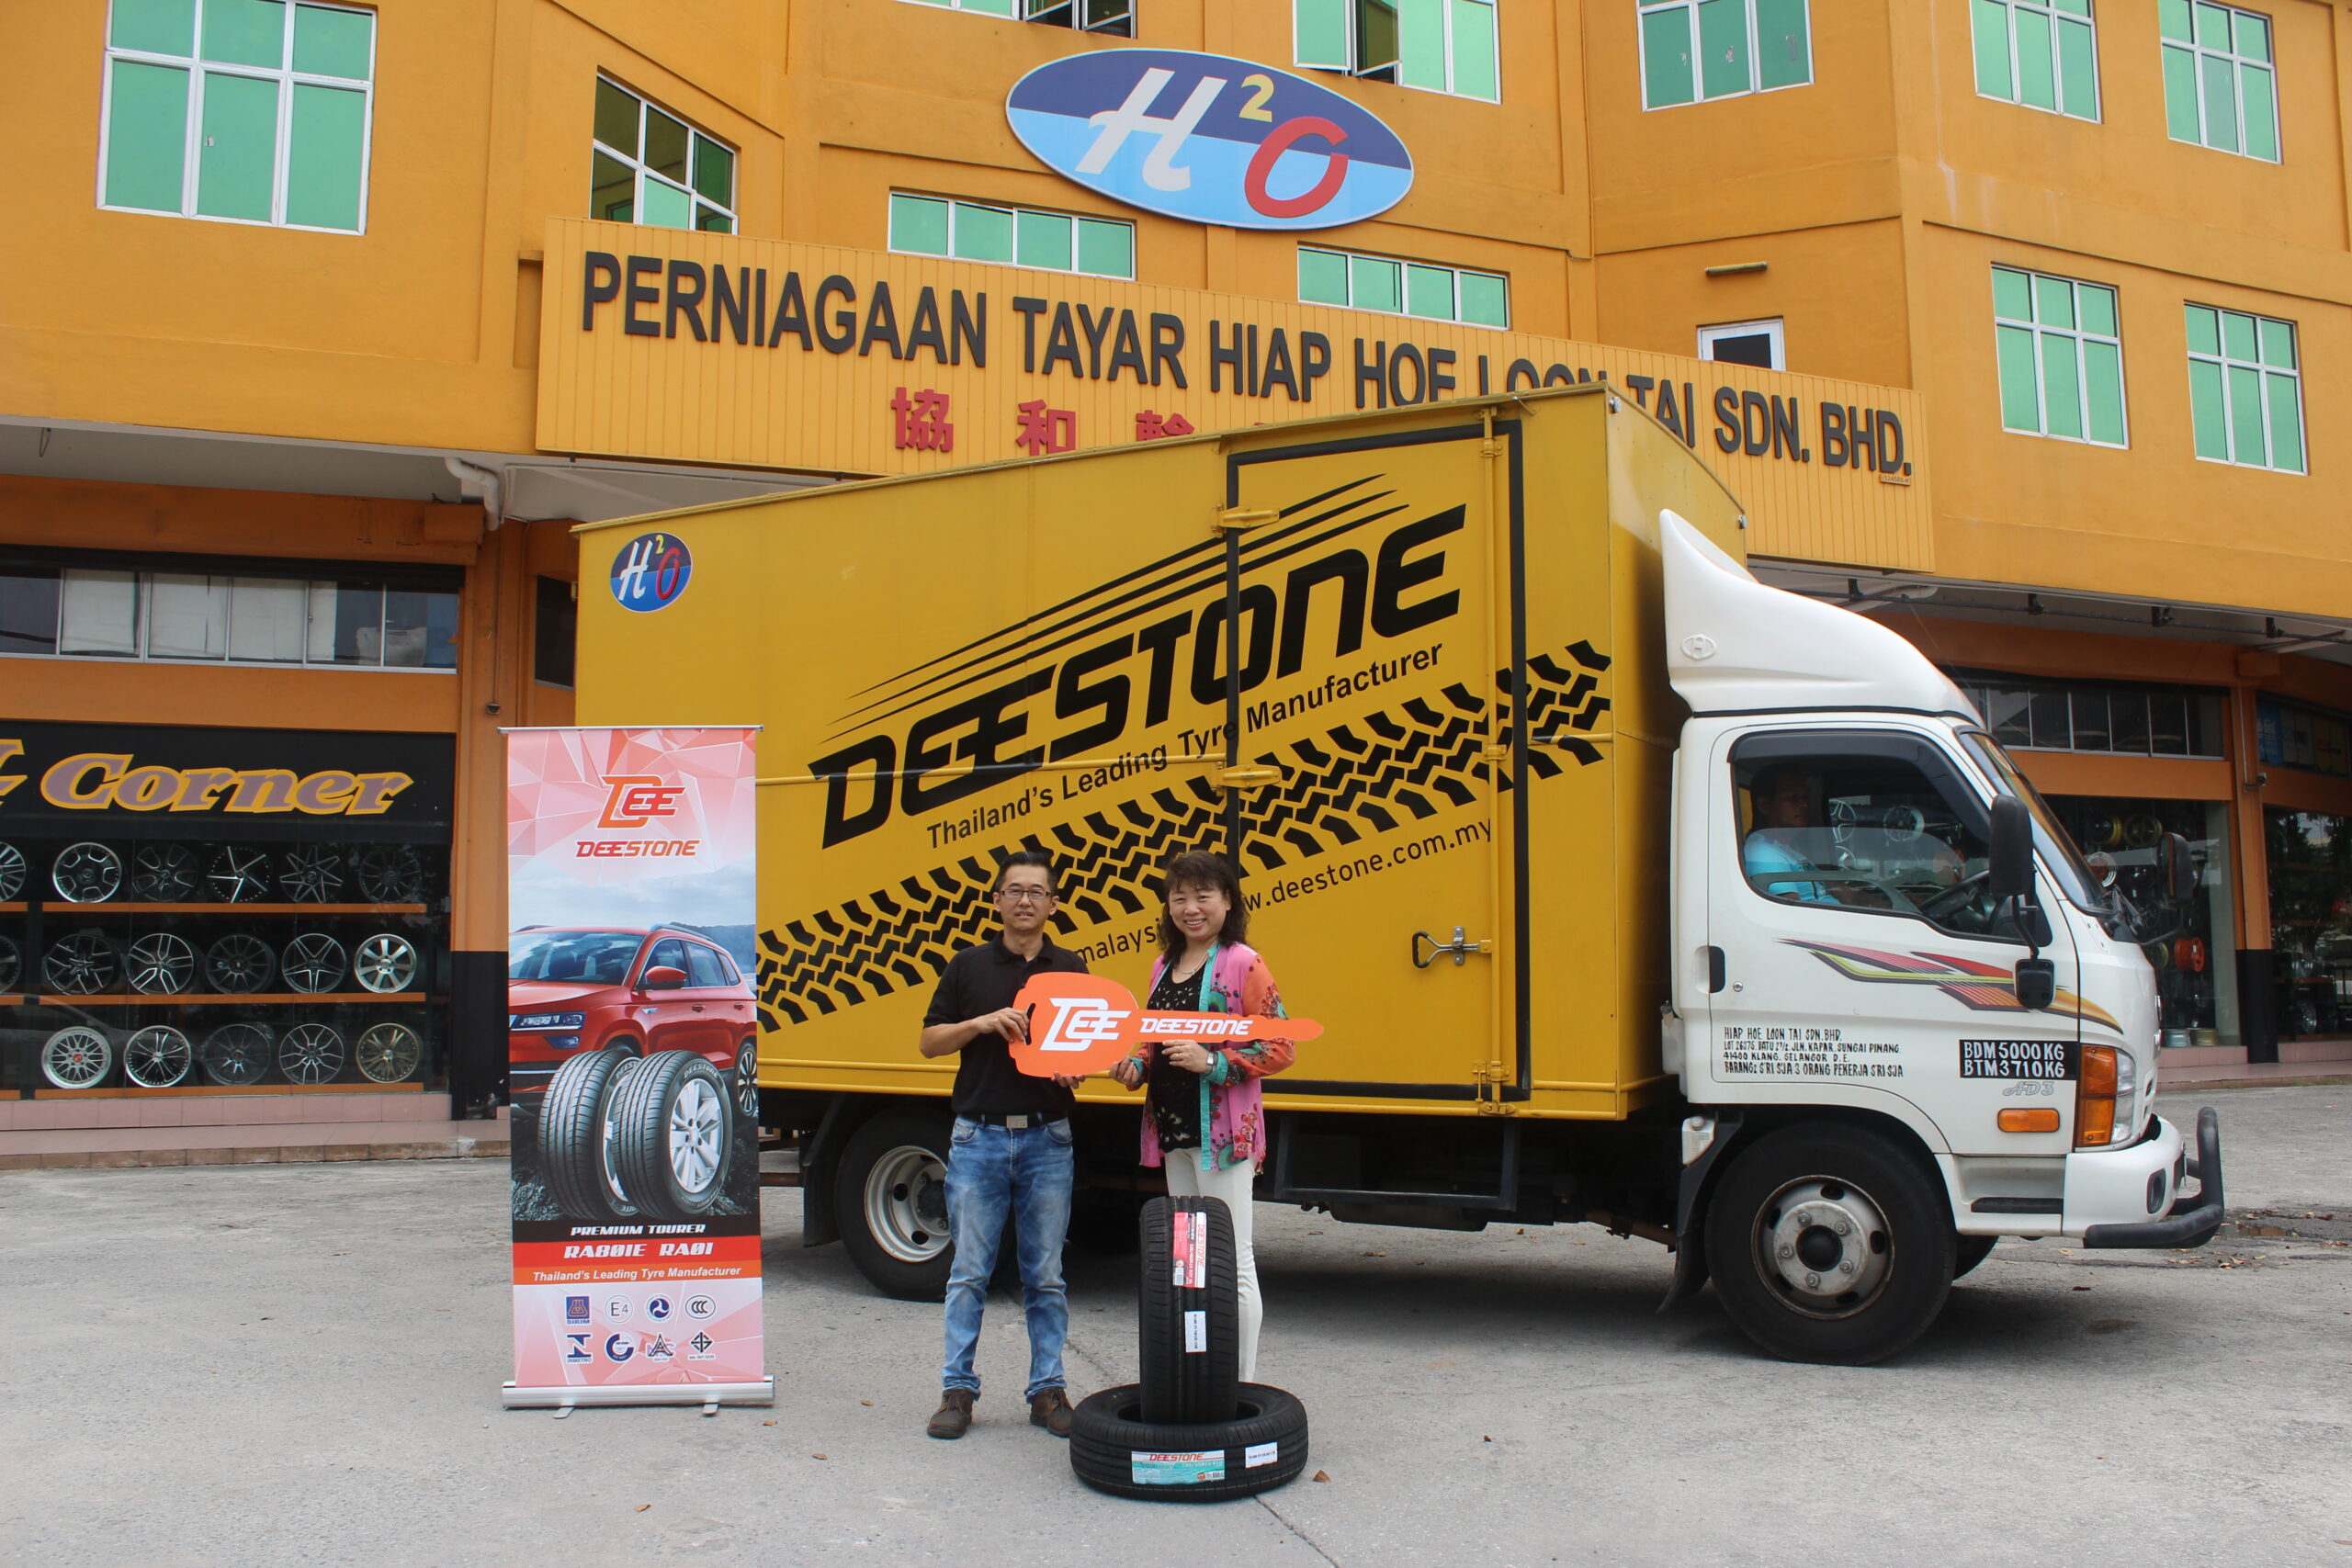 Deestone Footprint Malaysia